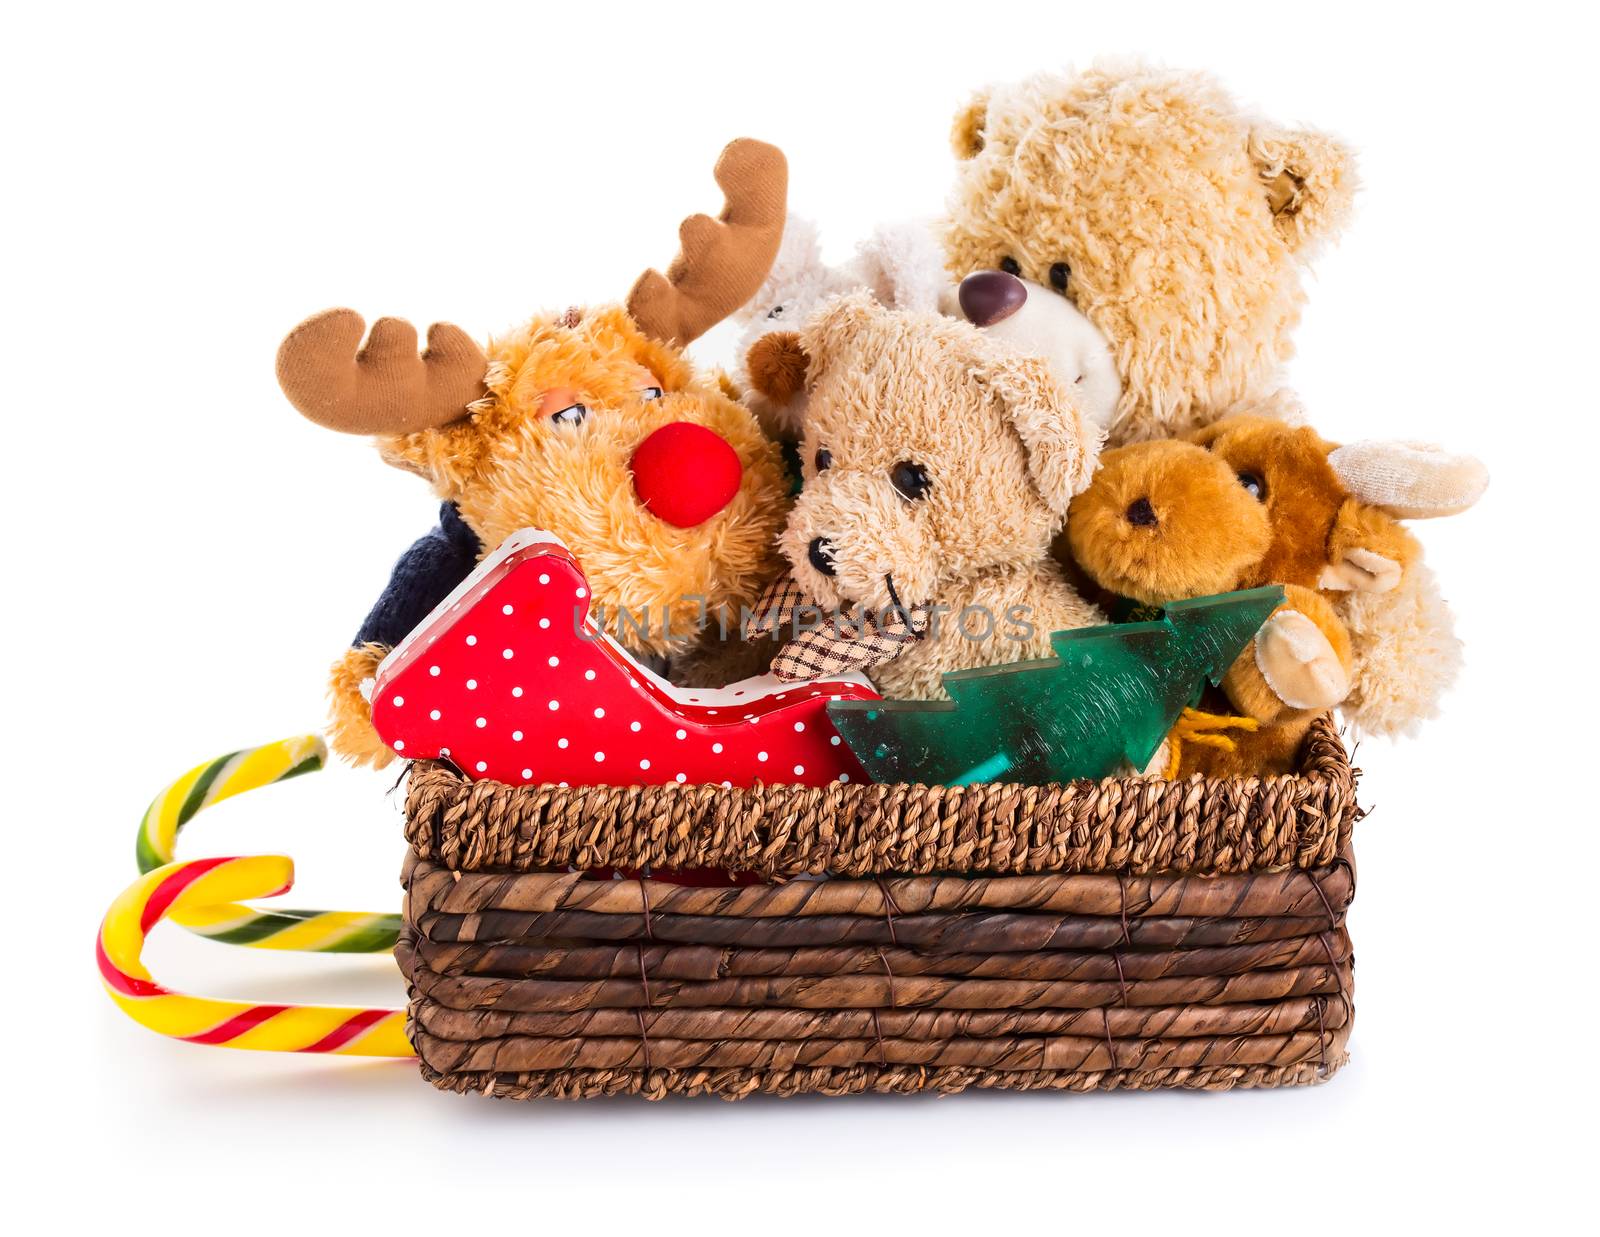 Stuffed animal toys in a christmas sledge by Valengilda